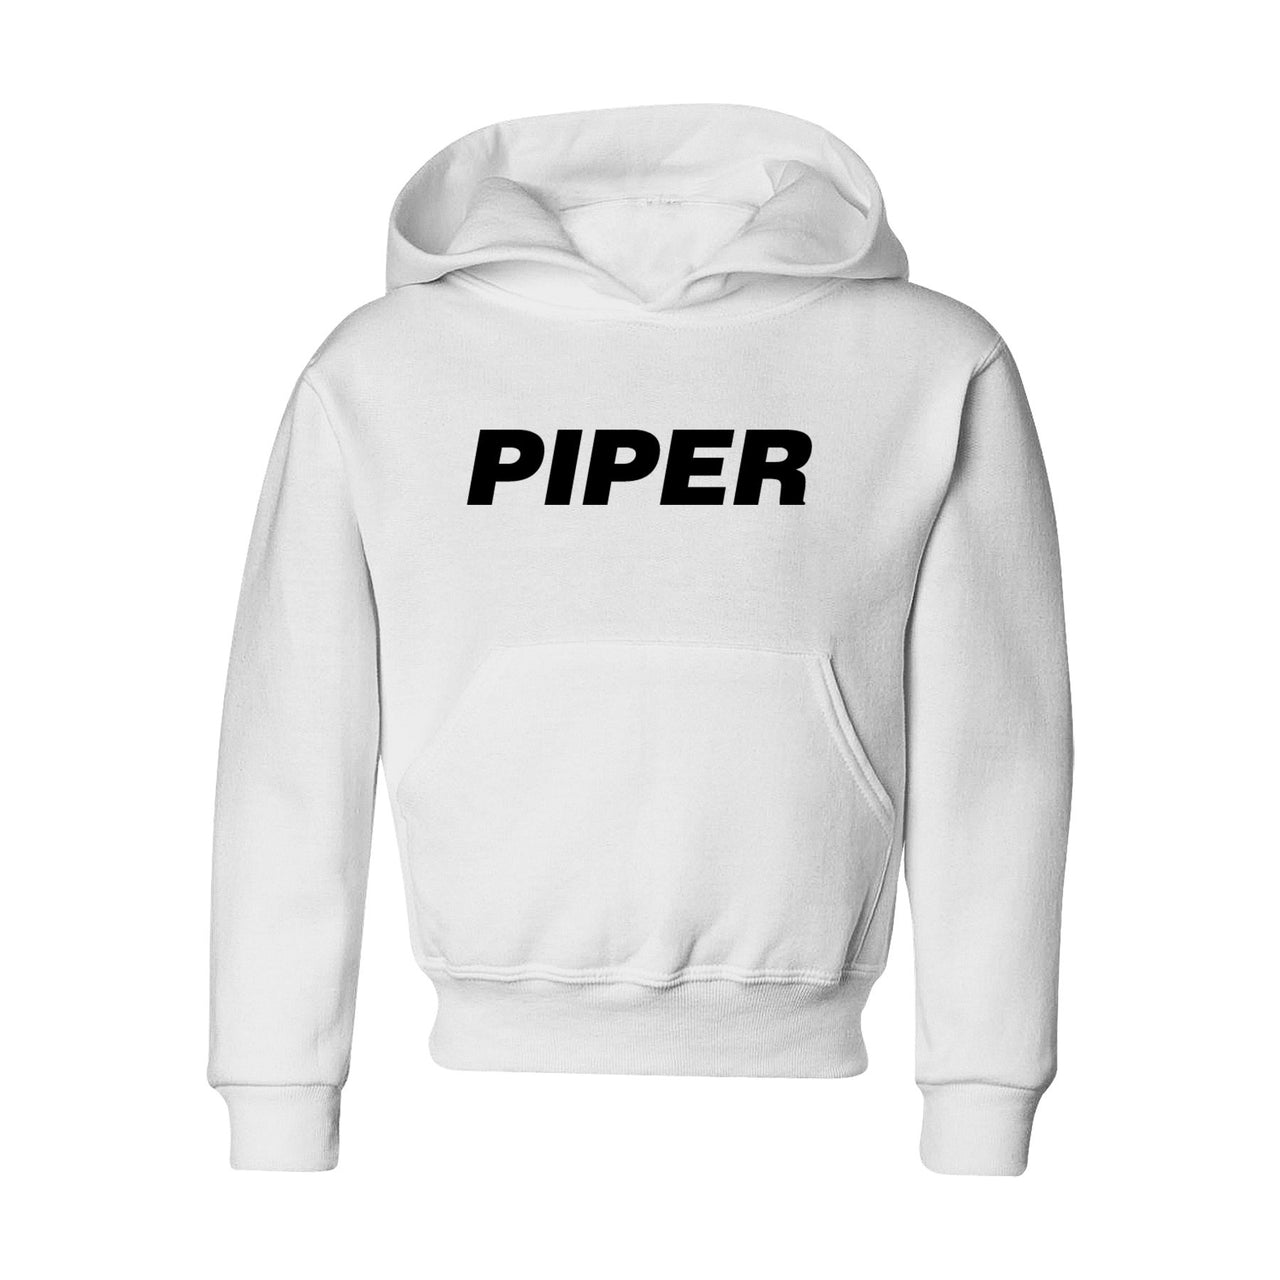 Piper & Text Designed "CHILDREN" Hoodies